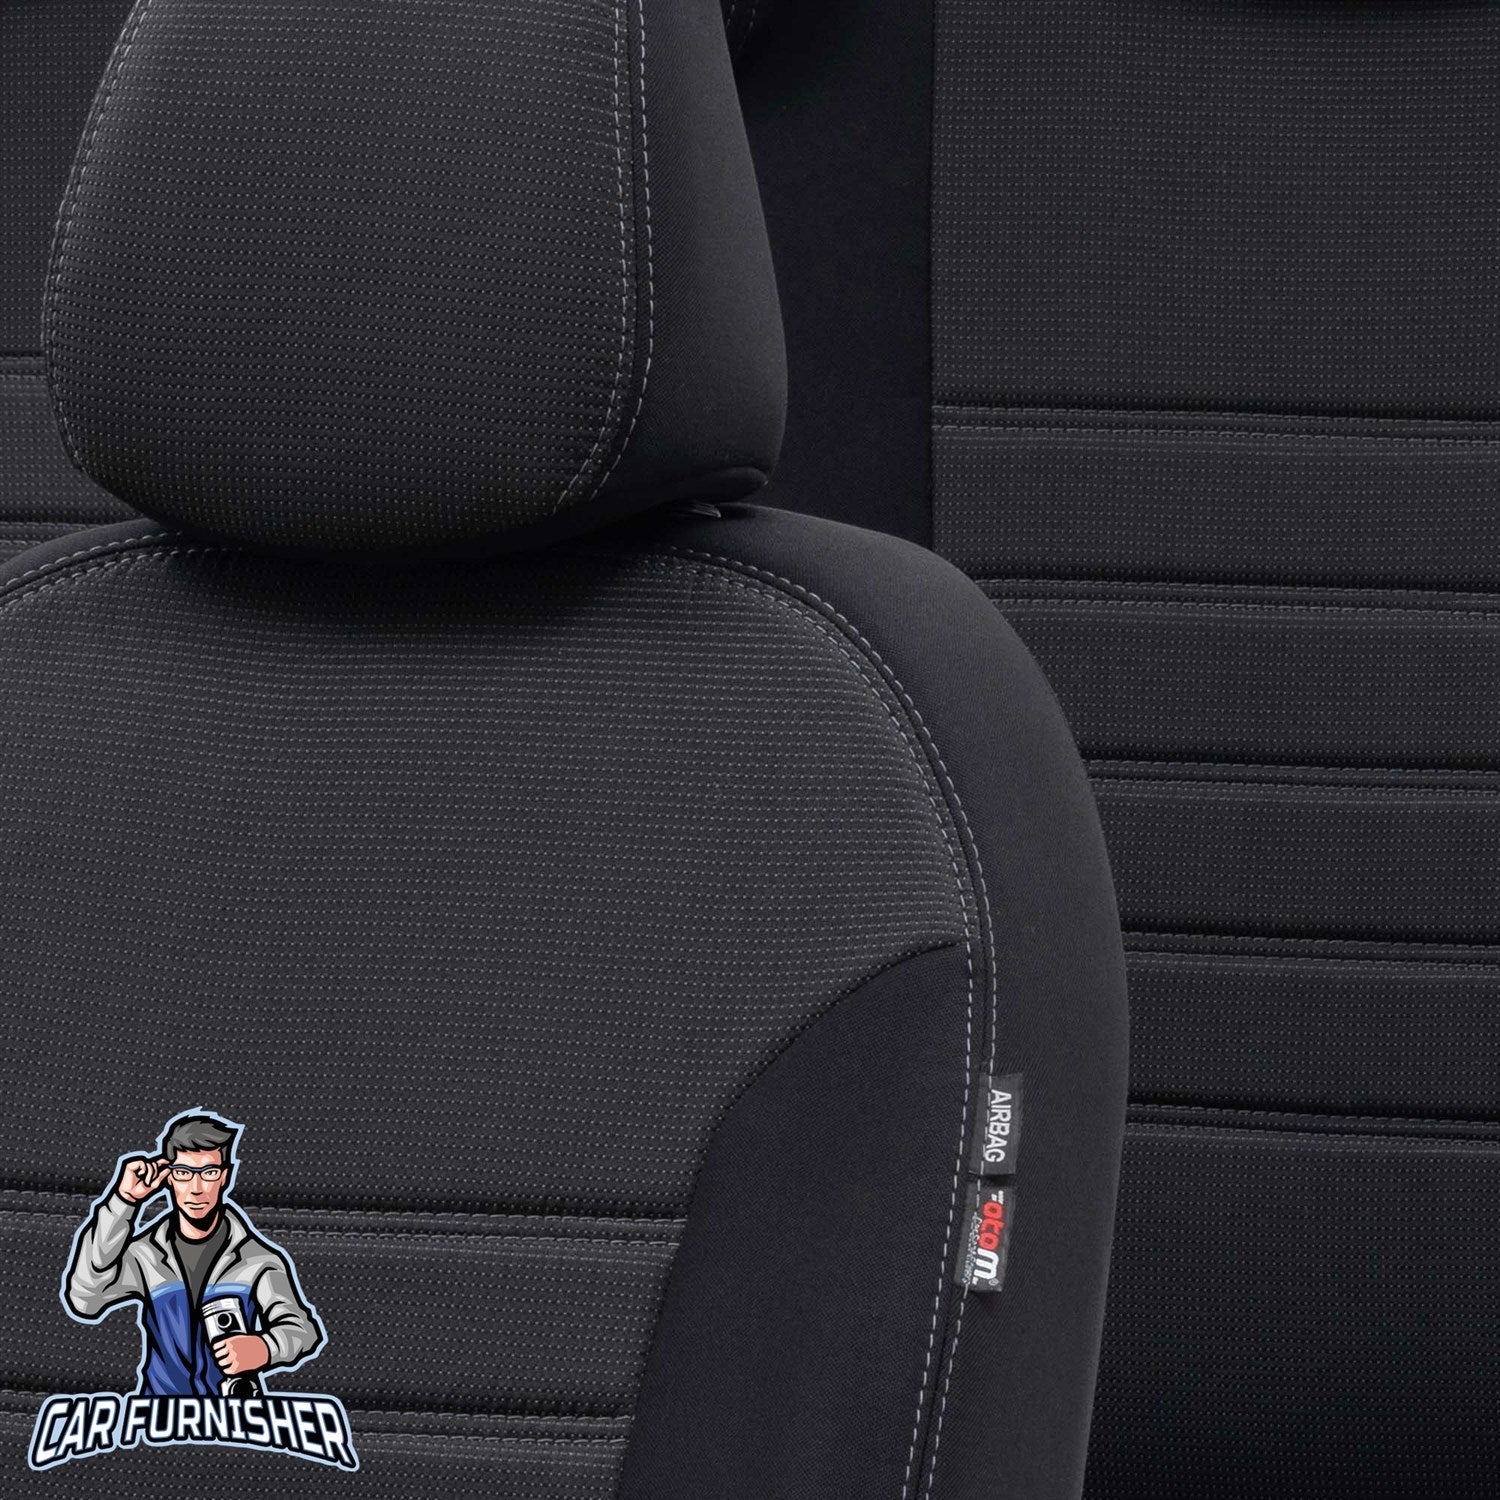 Renault Twingo Seat Cover Original Jacquard Design Dark Gray Jacquard Fabric